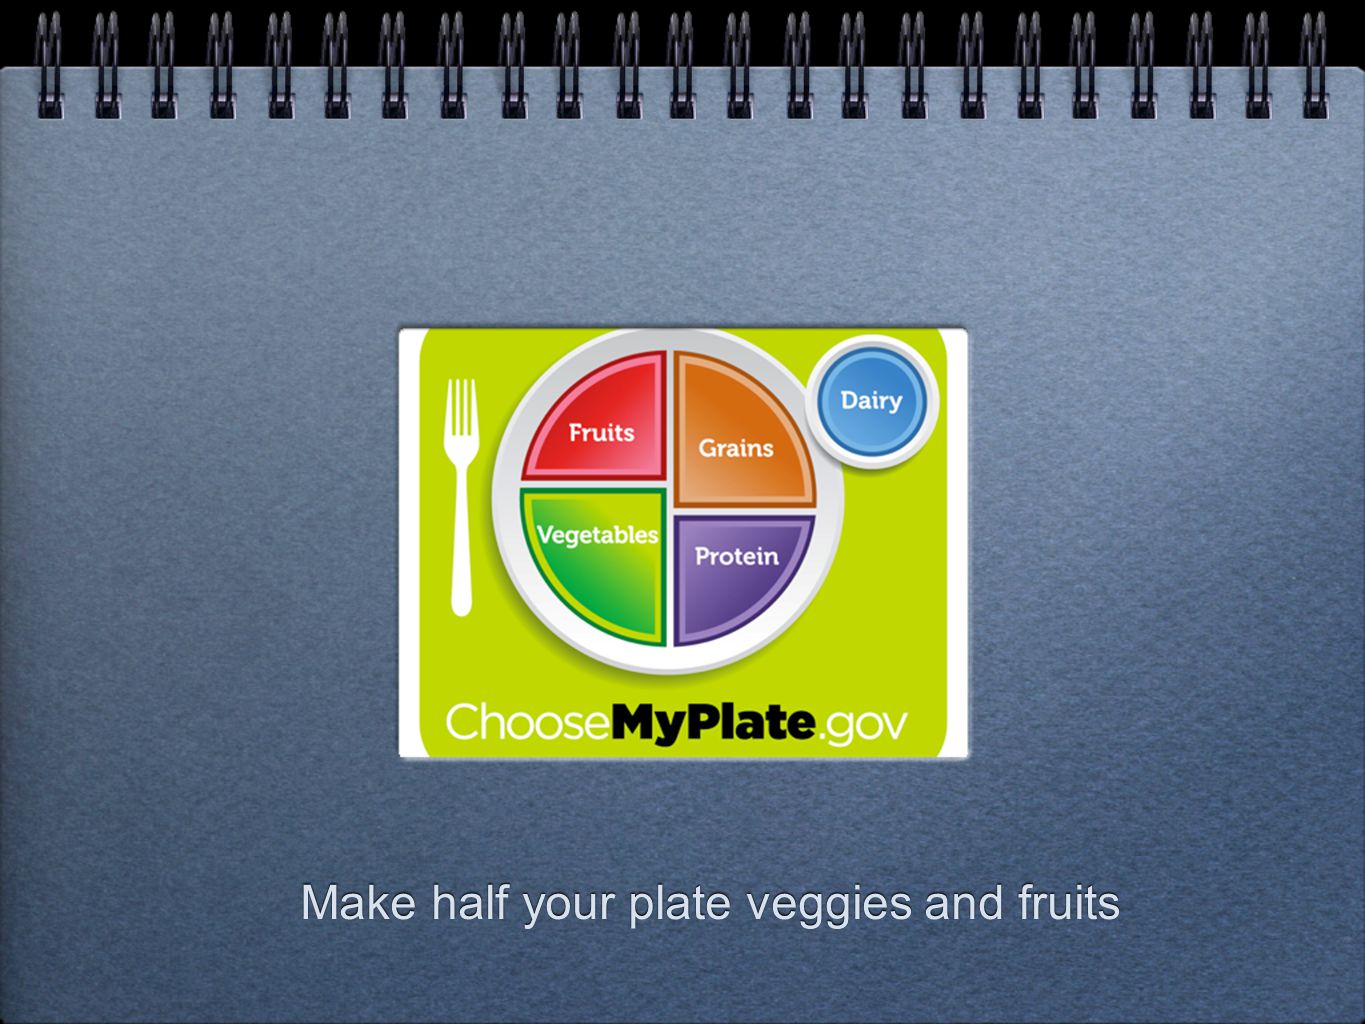 Make half your plate veggies and fruits